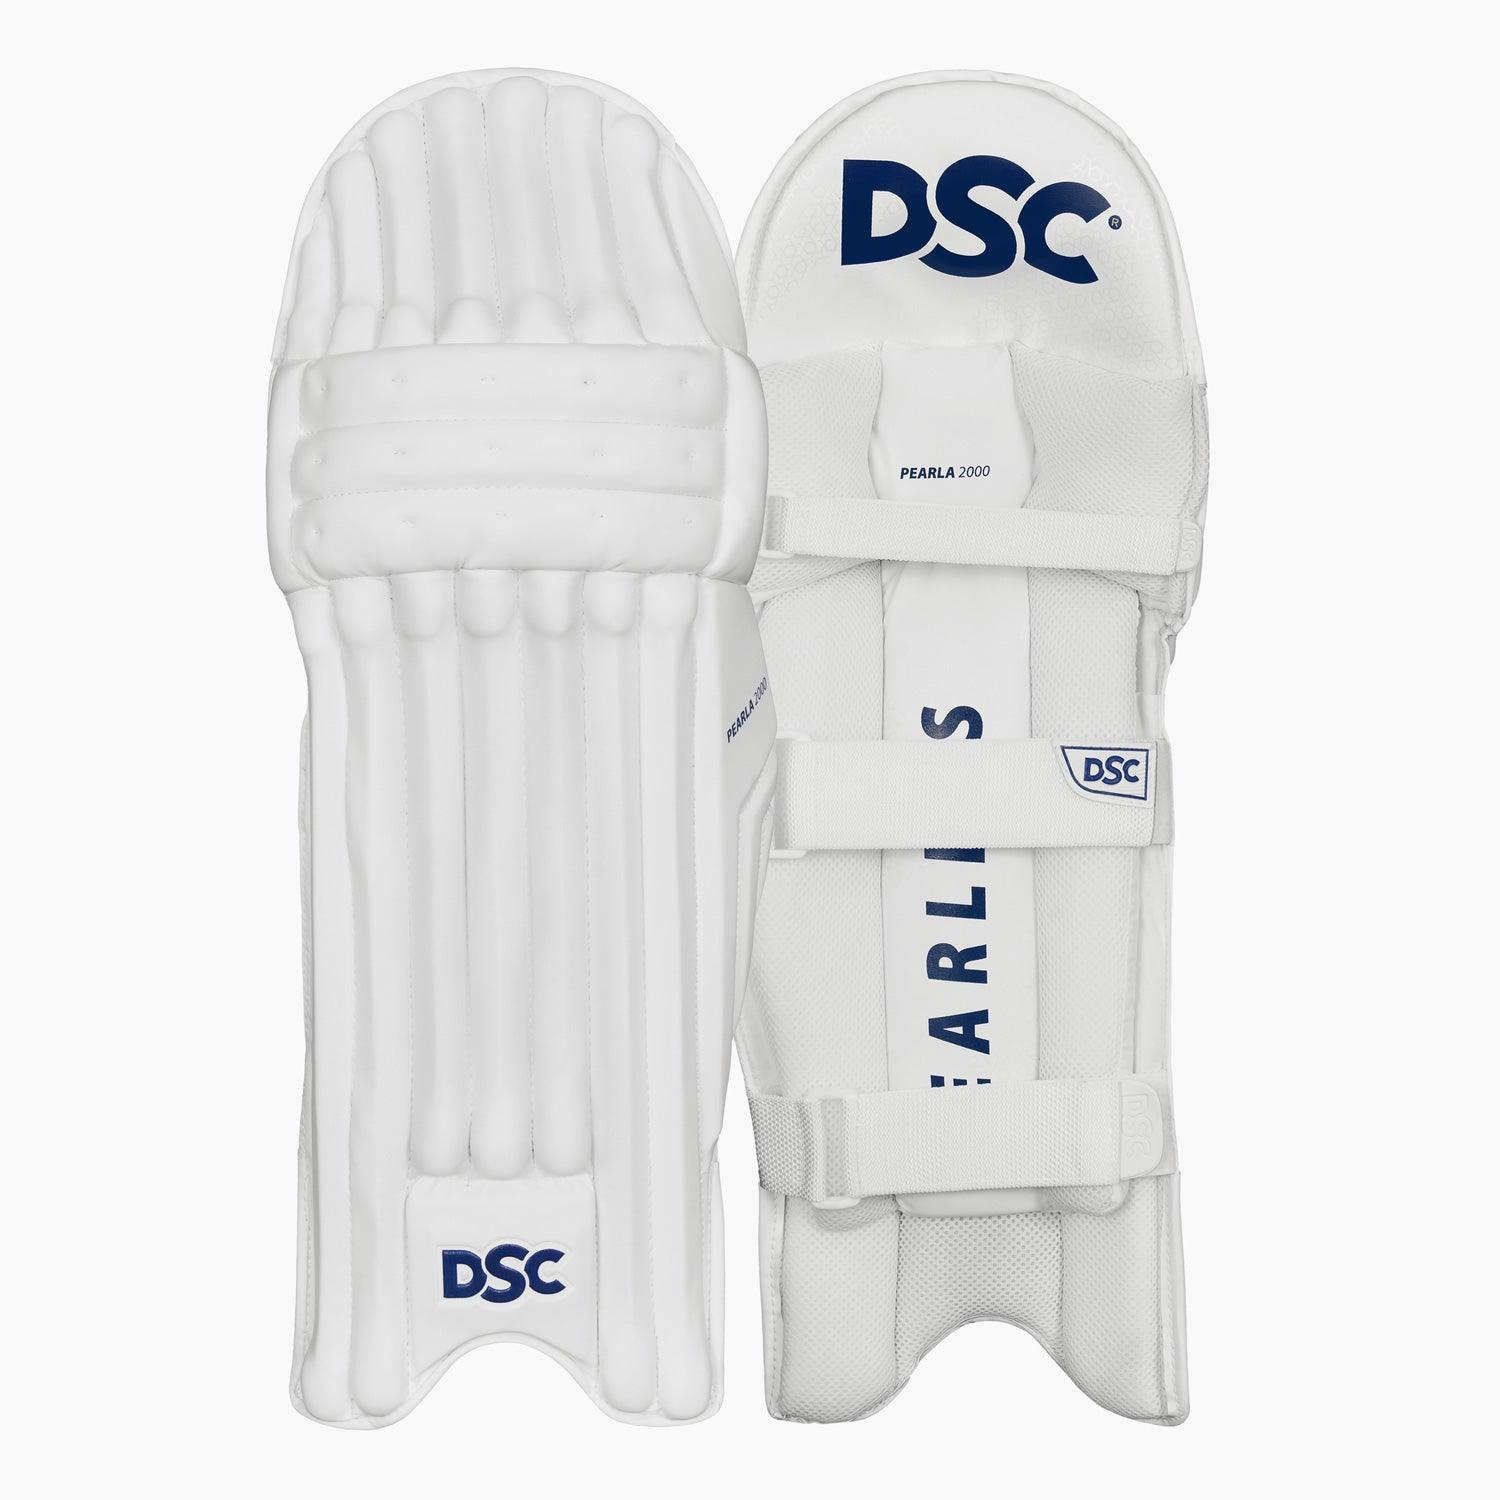 DSC Pearla 2000 Cricket Batting Pads - ADULT - AT Sports